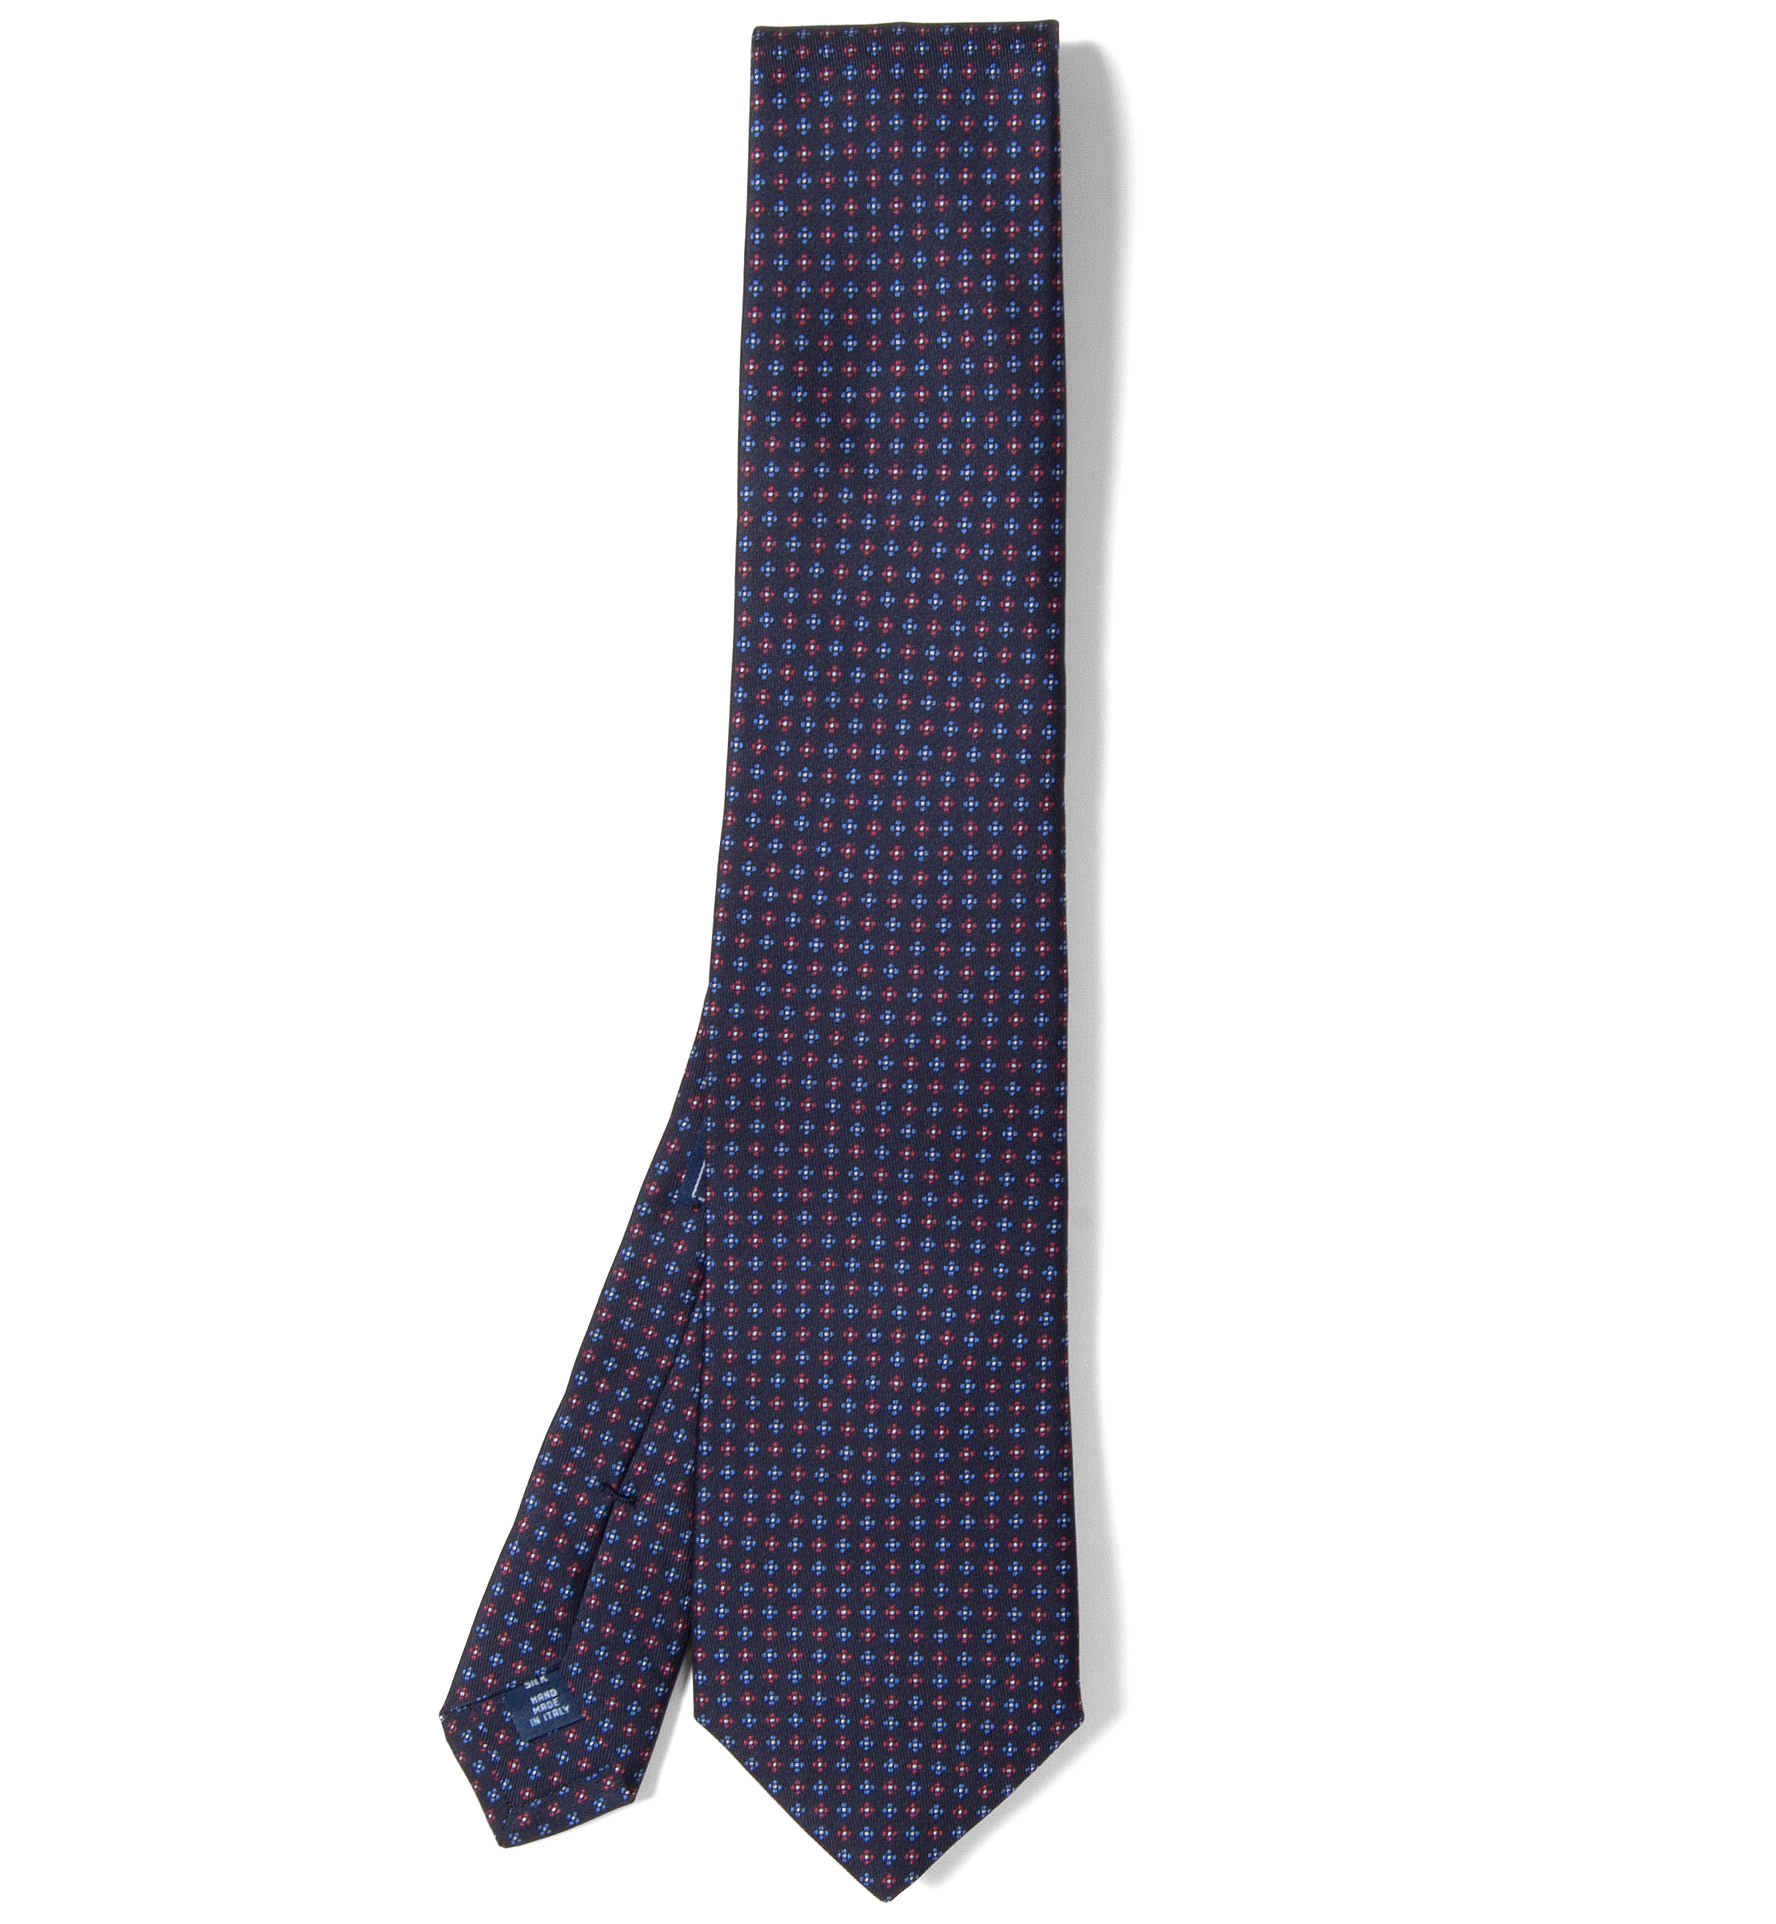 Lombardia Navy Print Tie by Proper Cloth